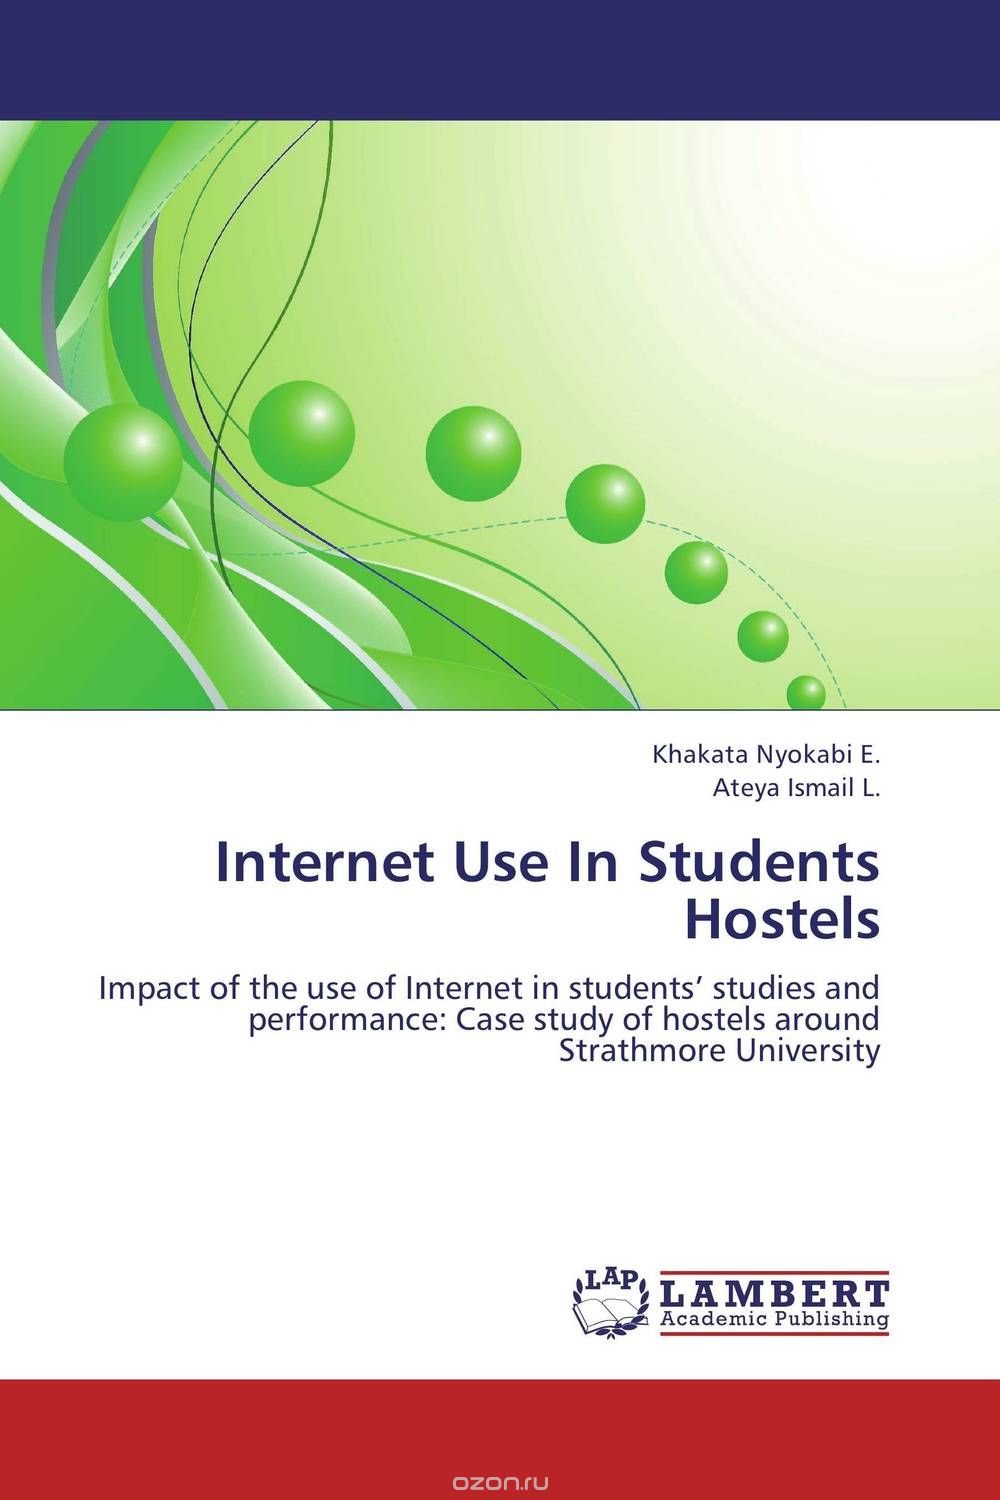 Скачать книгу "Internet Use In Students Hostels"